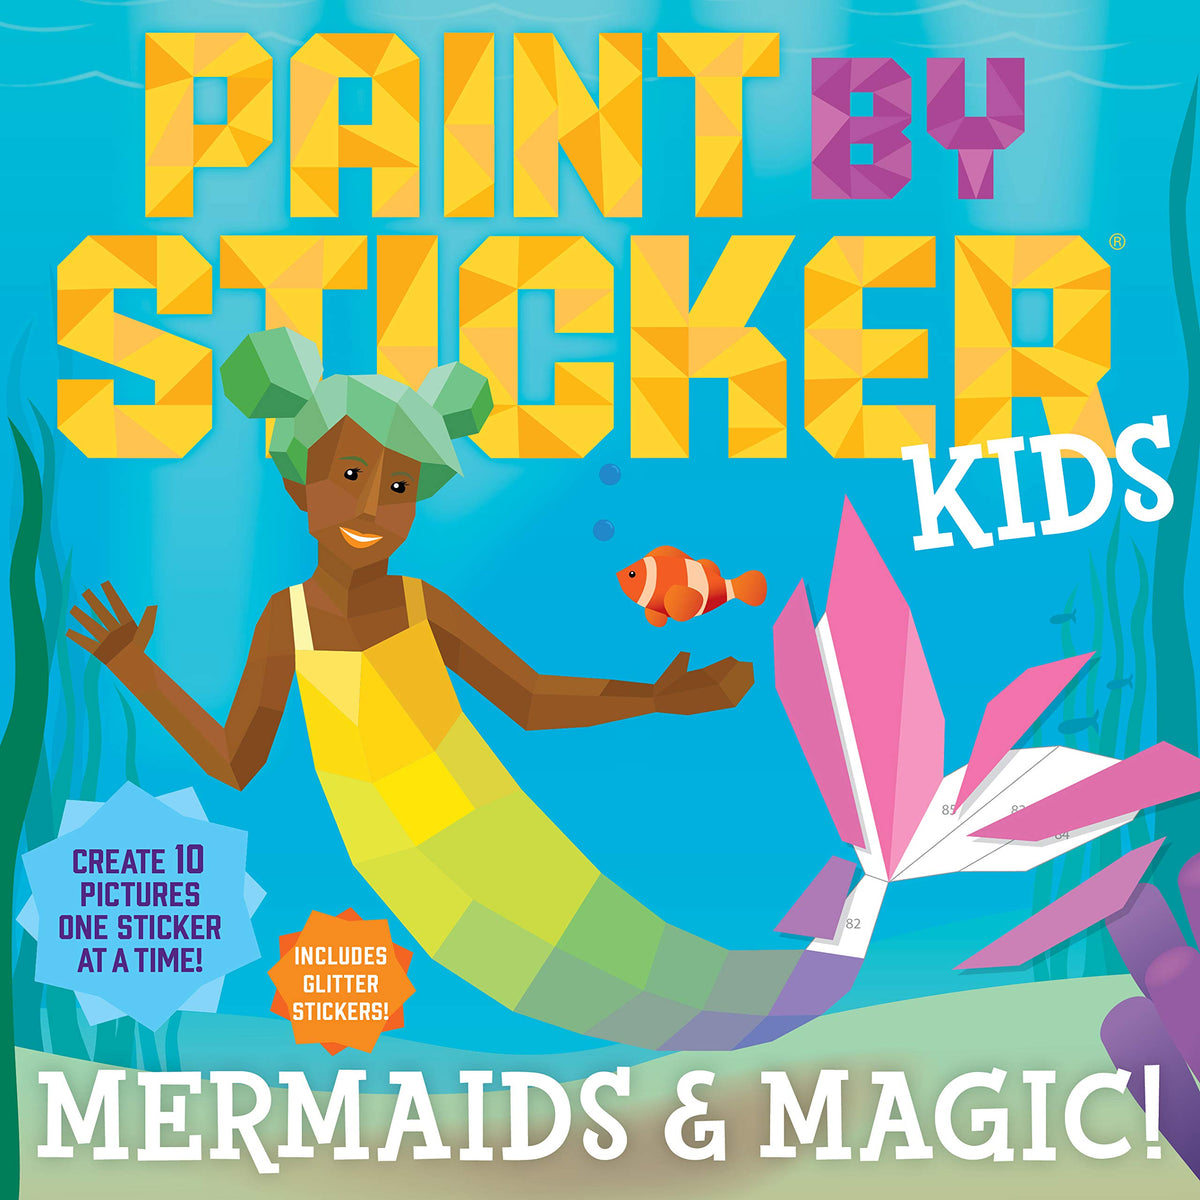 Paint By Sticker Kids Book